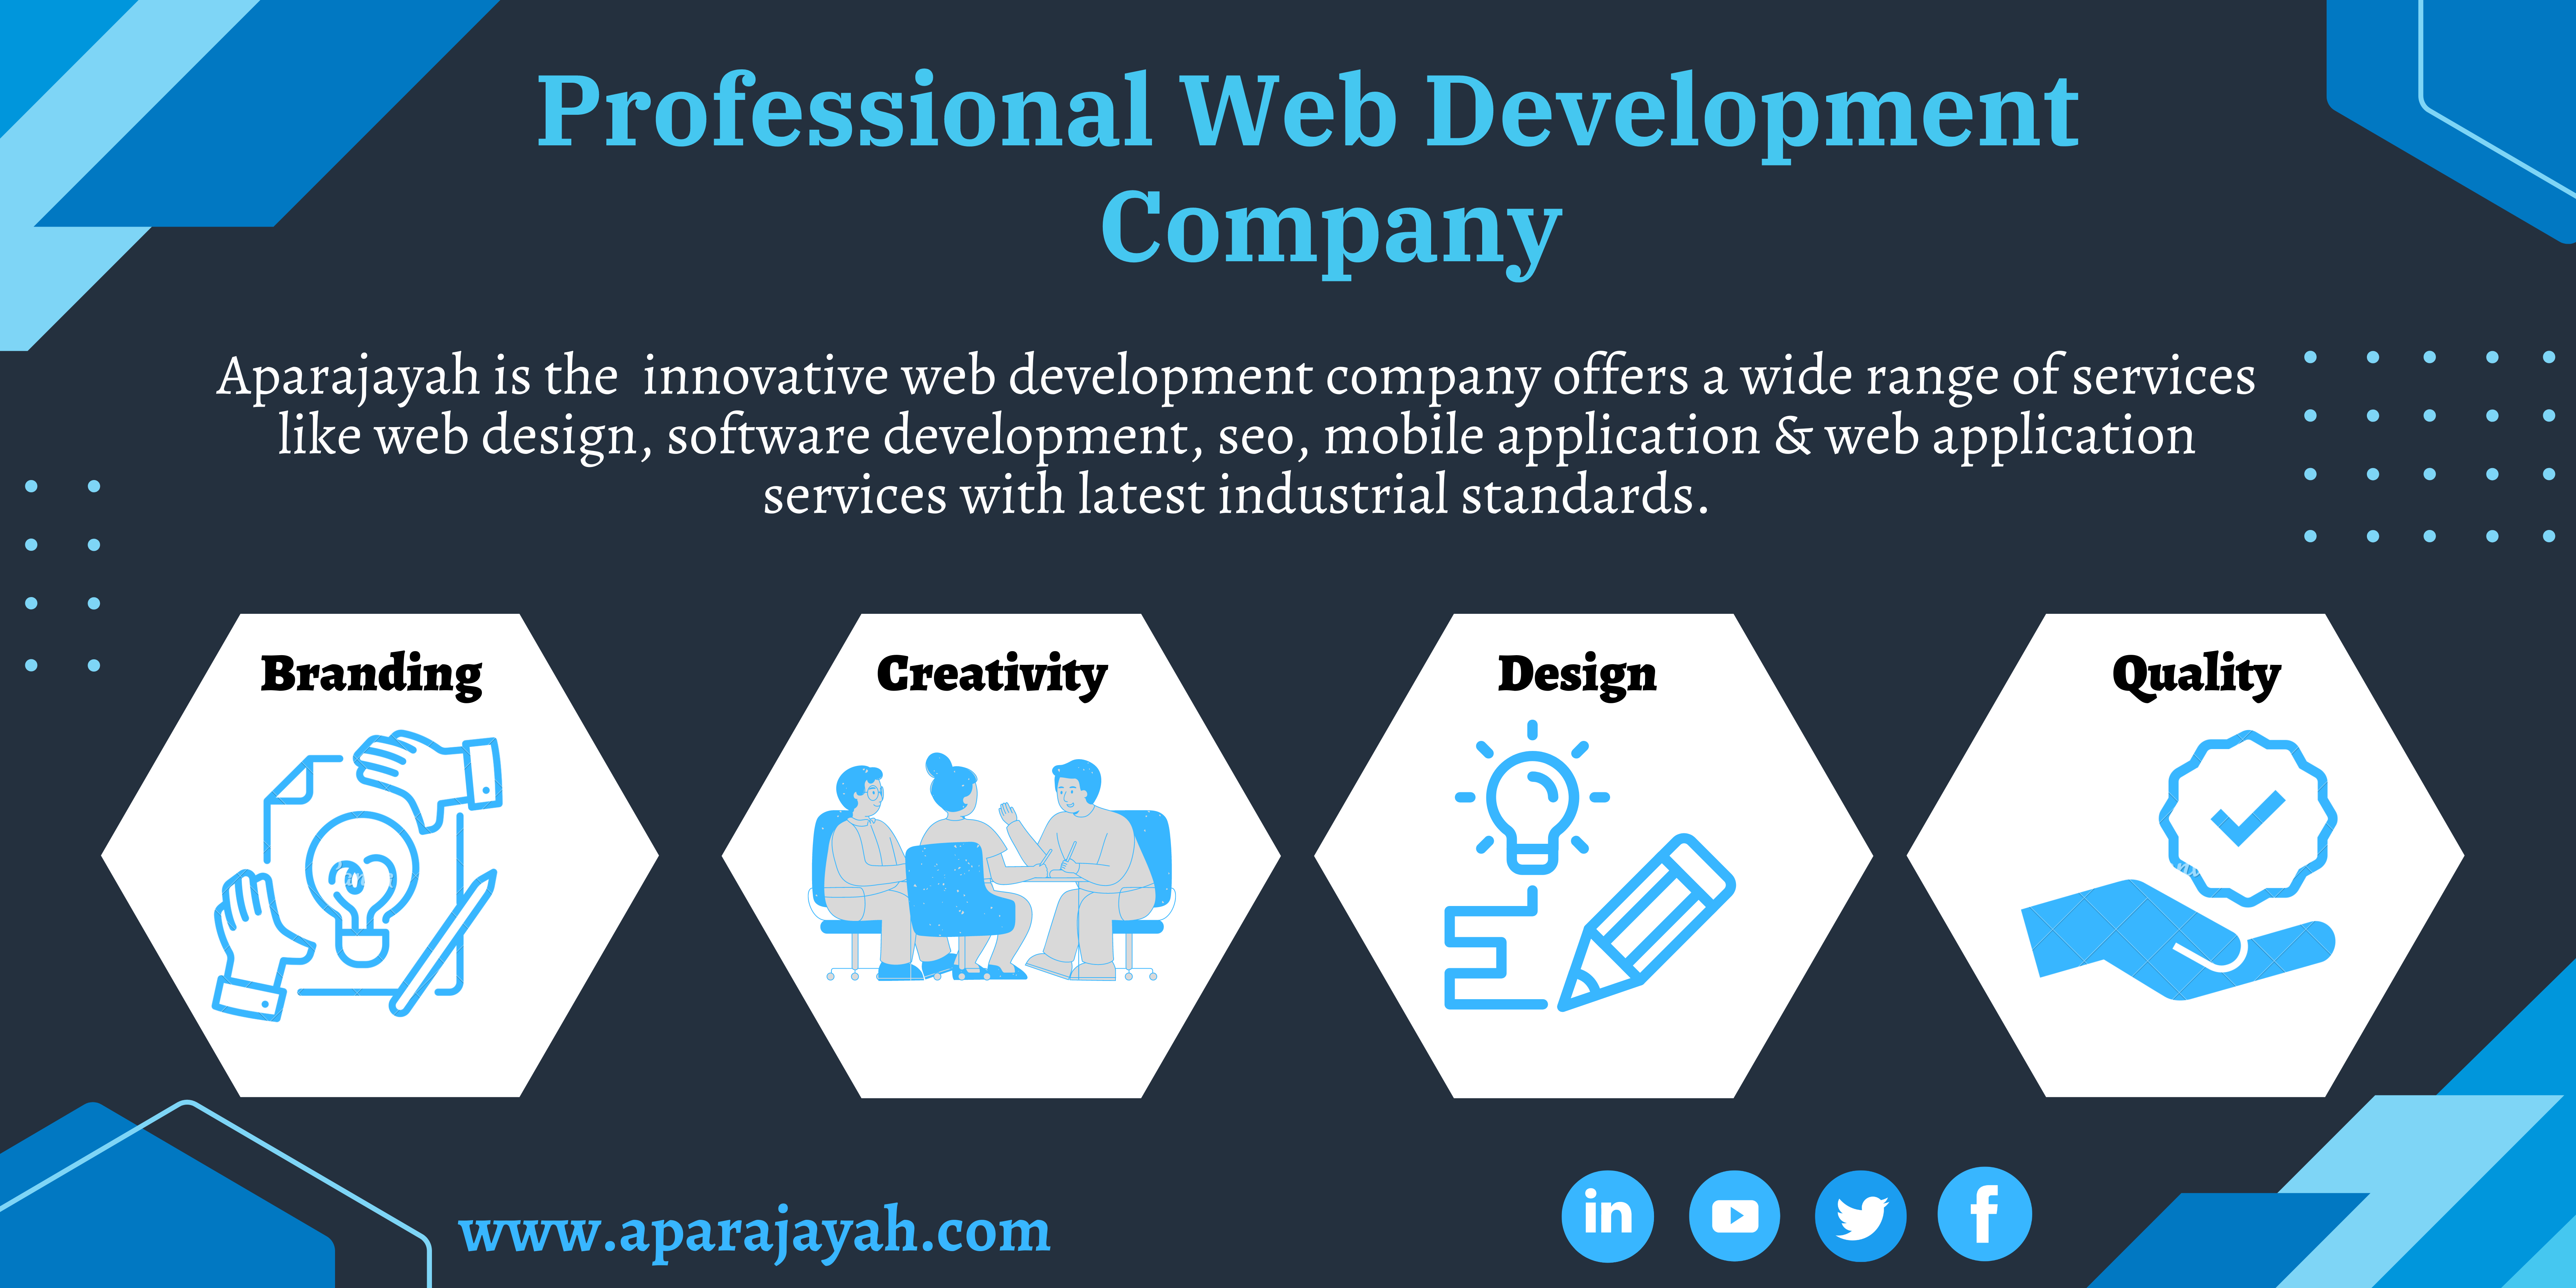 Web Development Company - Aparajayah|IT Services|Professional Services